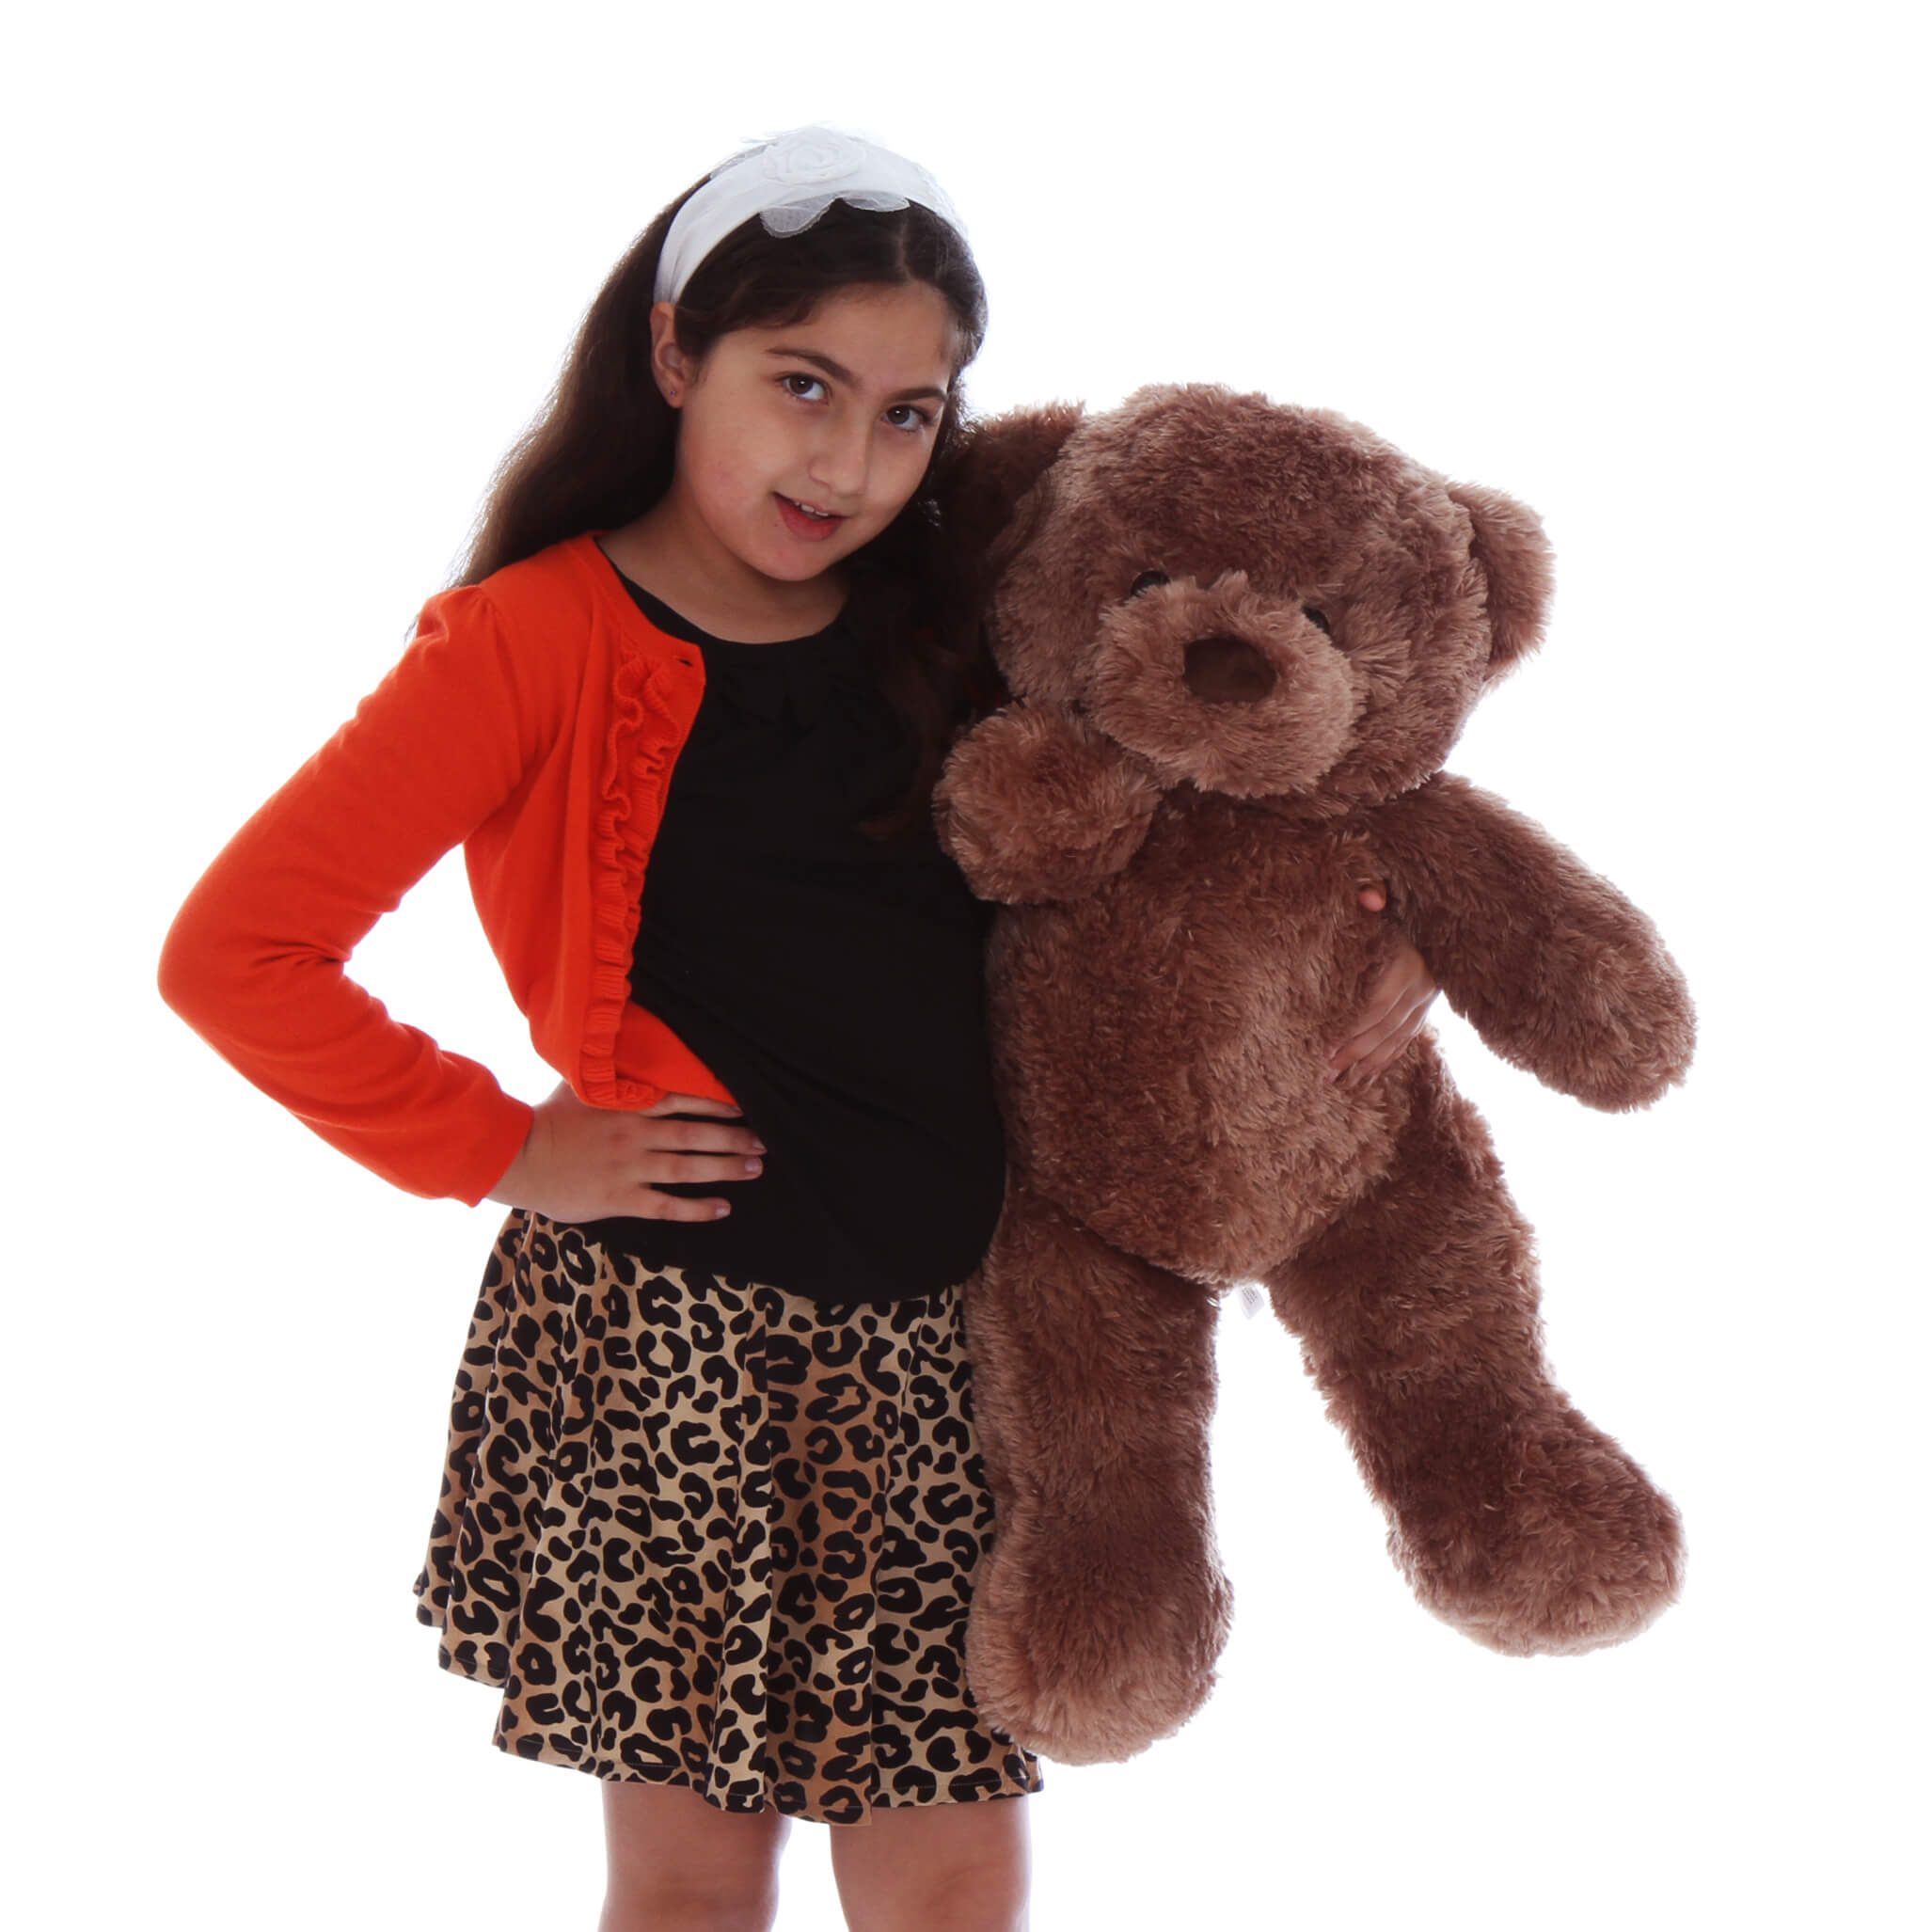 enormously-big-2-ft-huggable-and-soft-teddy-bear-mocha-brown-big-chubs-1.jpg